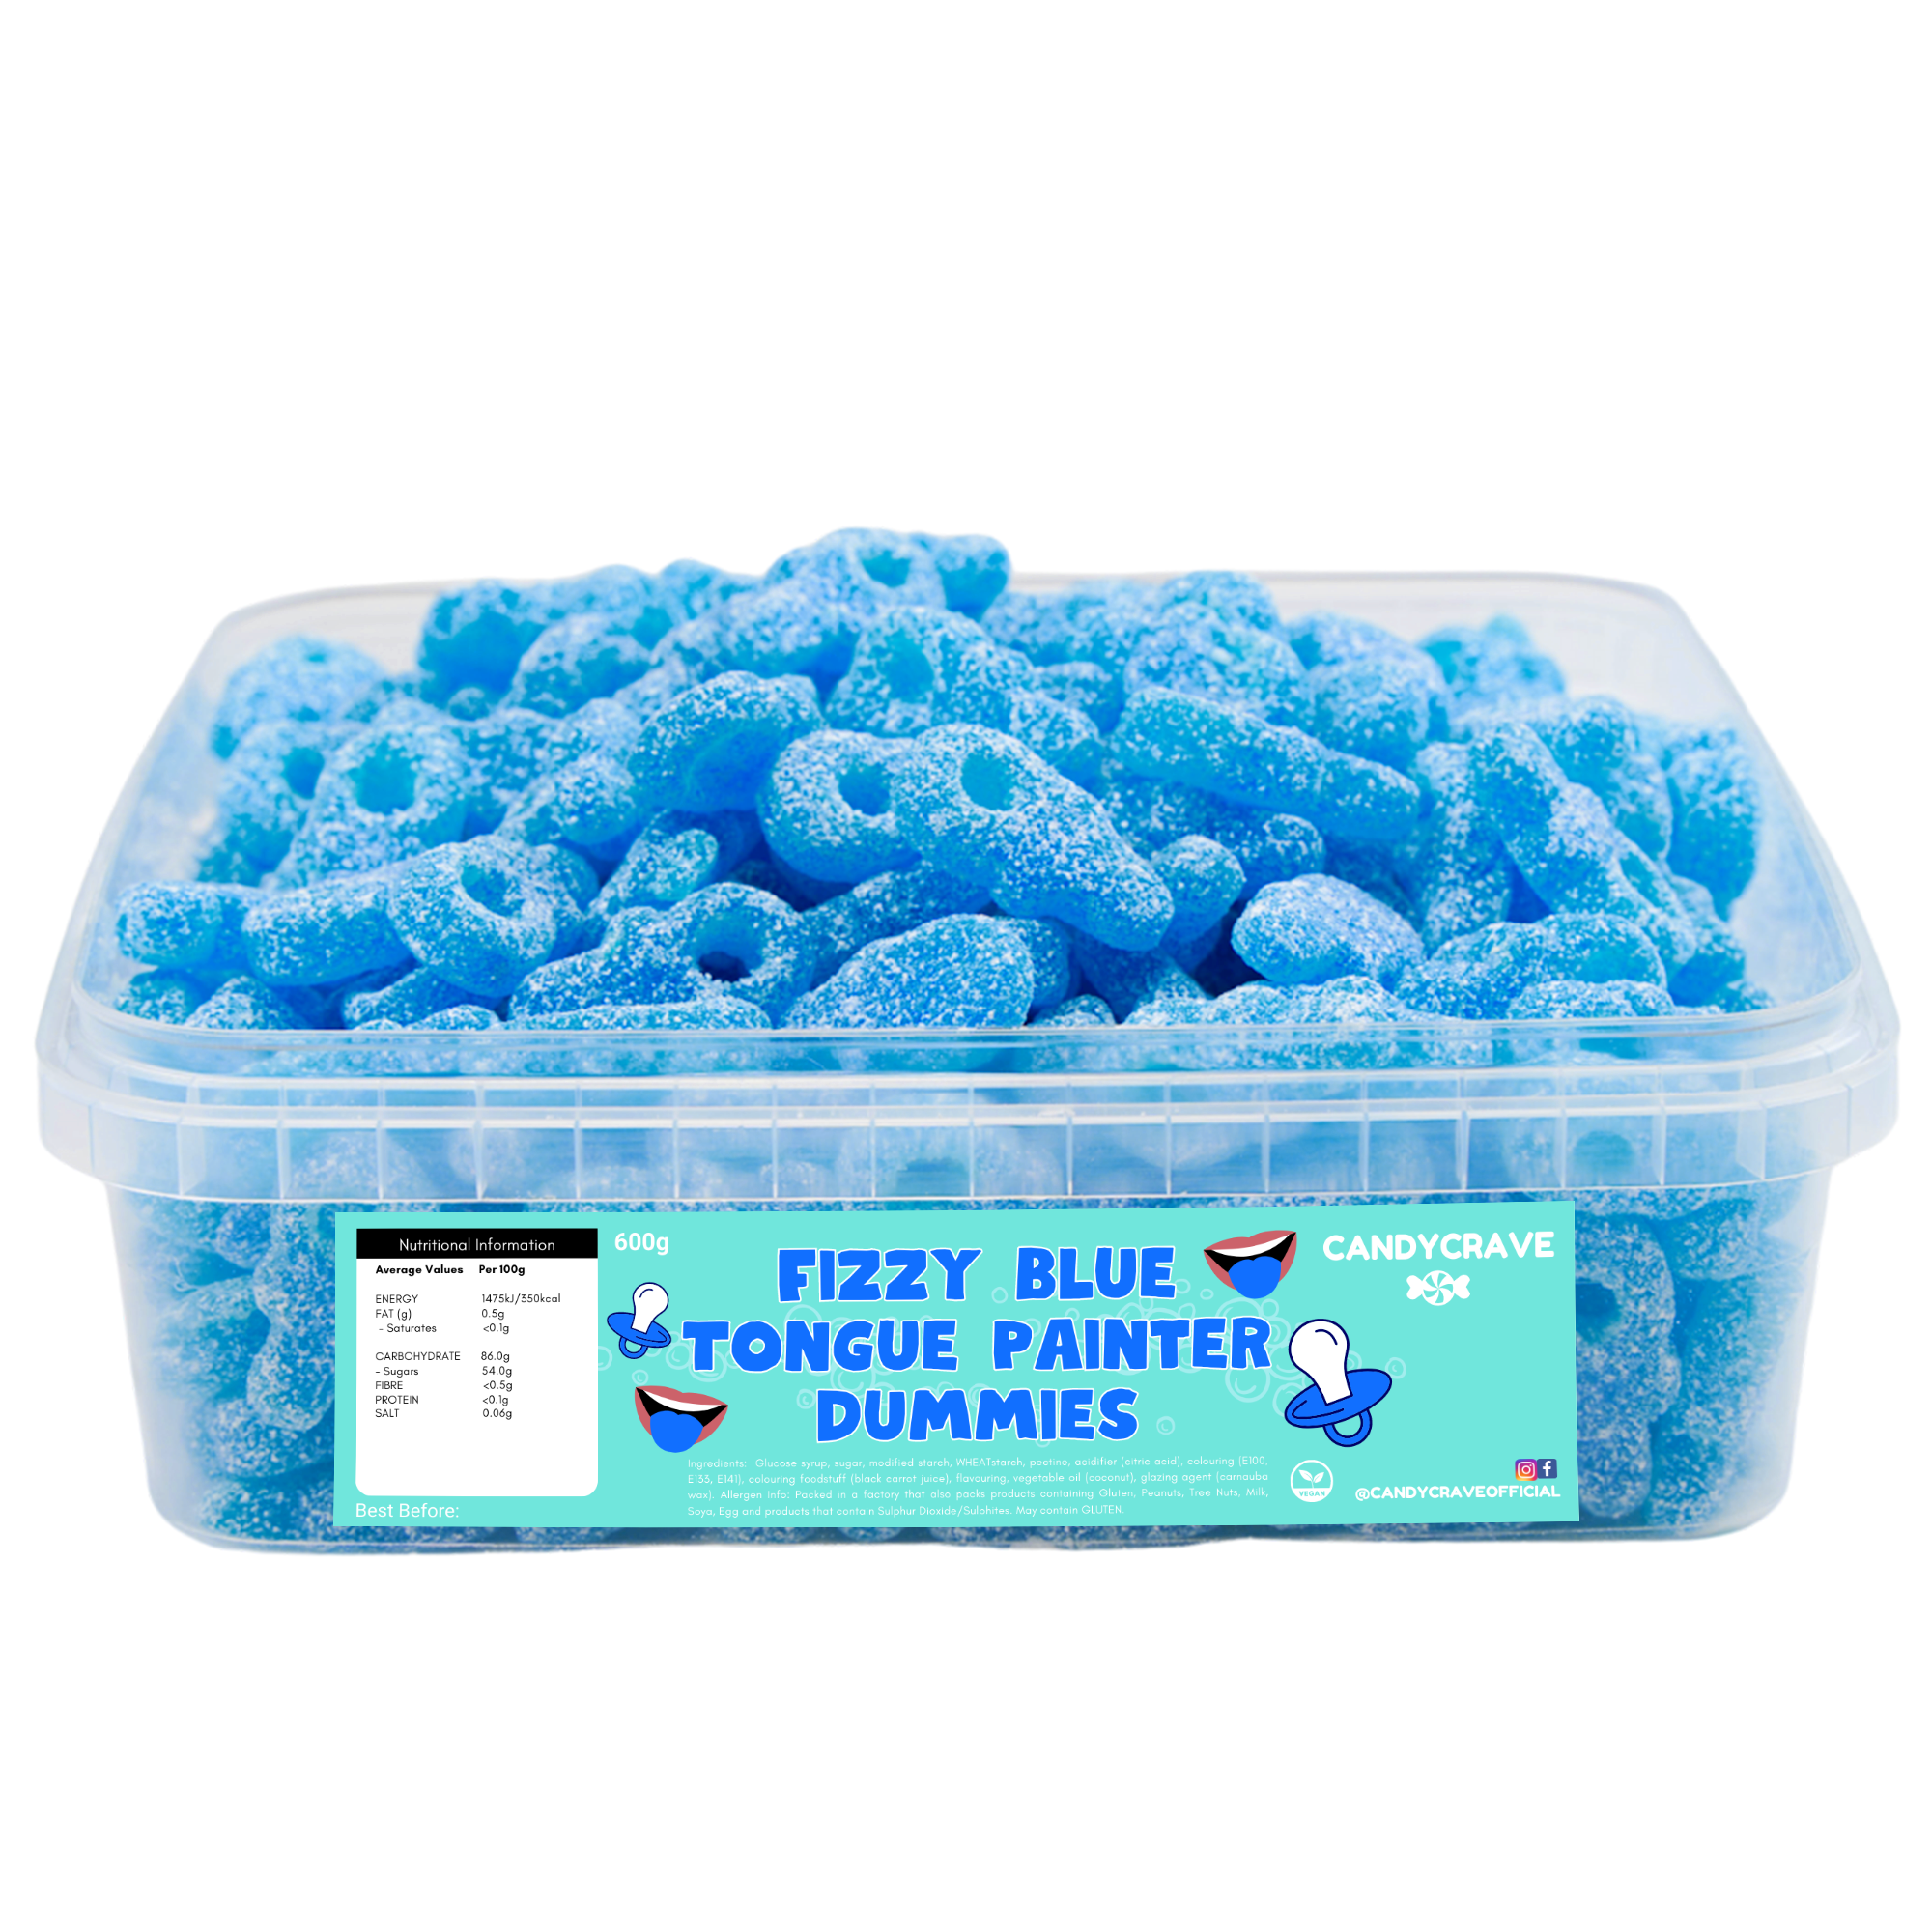 FIZZY BLUE TONGUE PAINTER DUMMIES (CANDYCRAVE) 600G